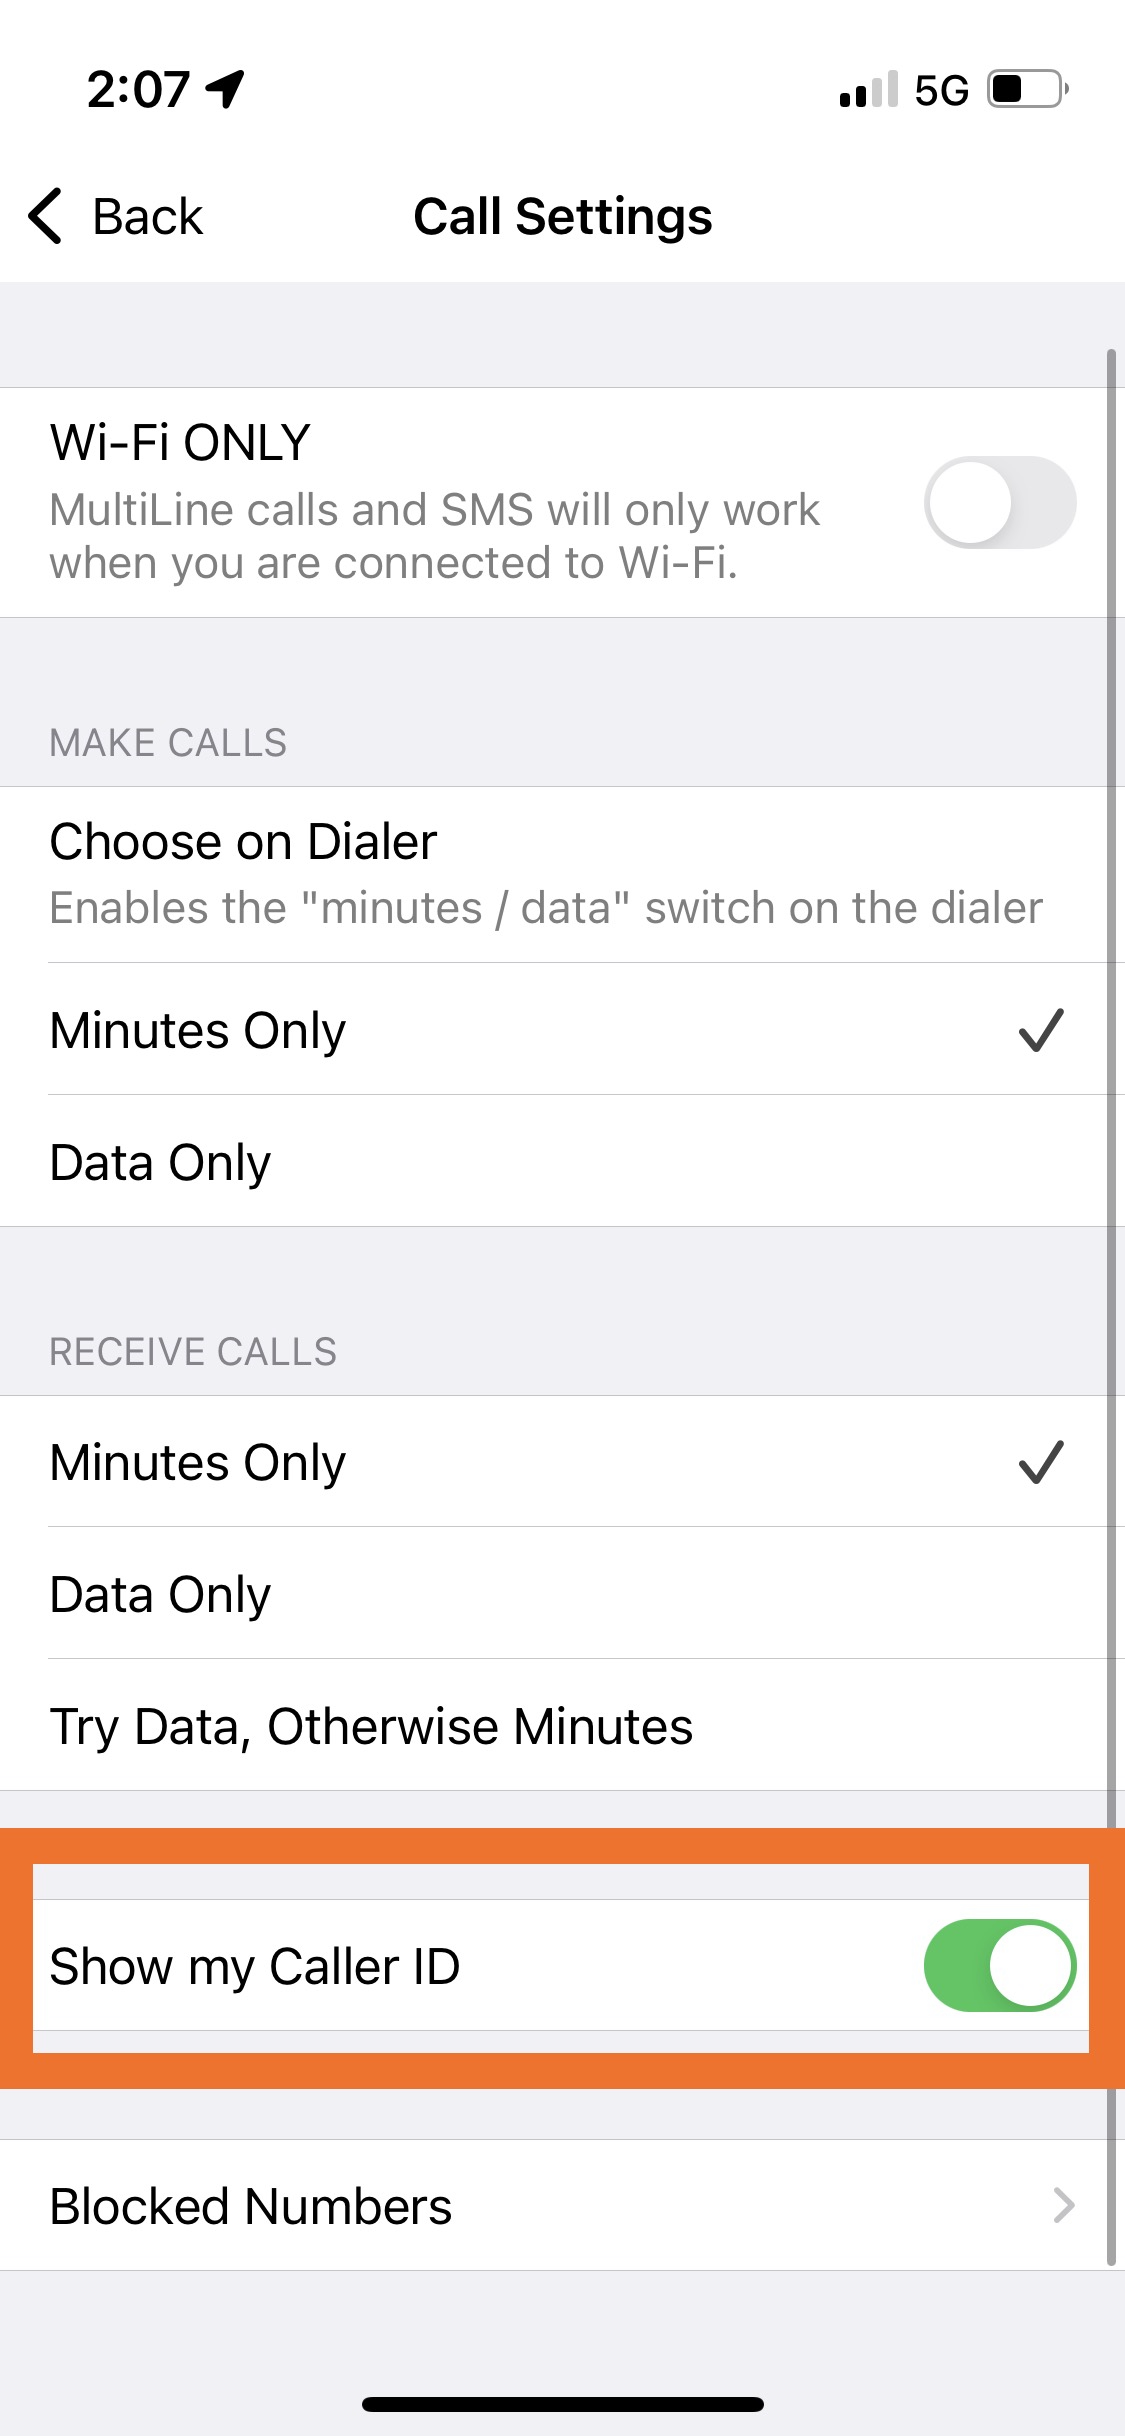 Call Settings menu Show my Caller ID highlighted